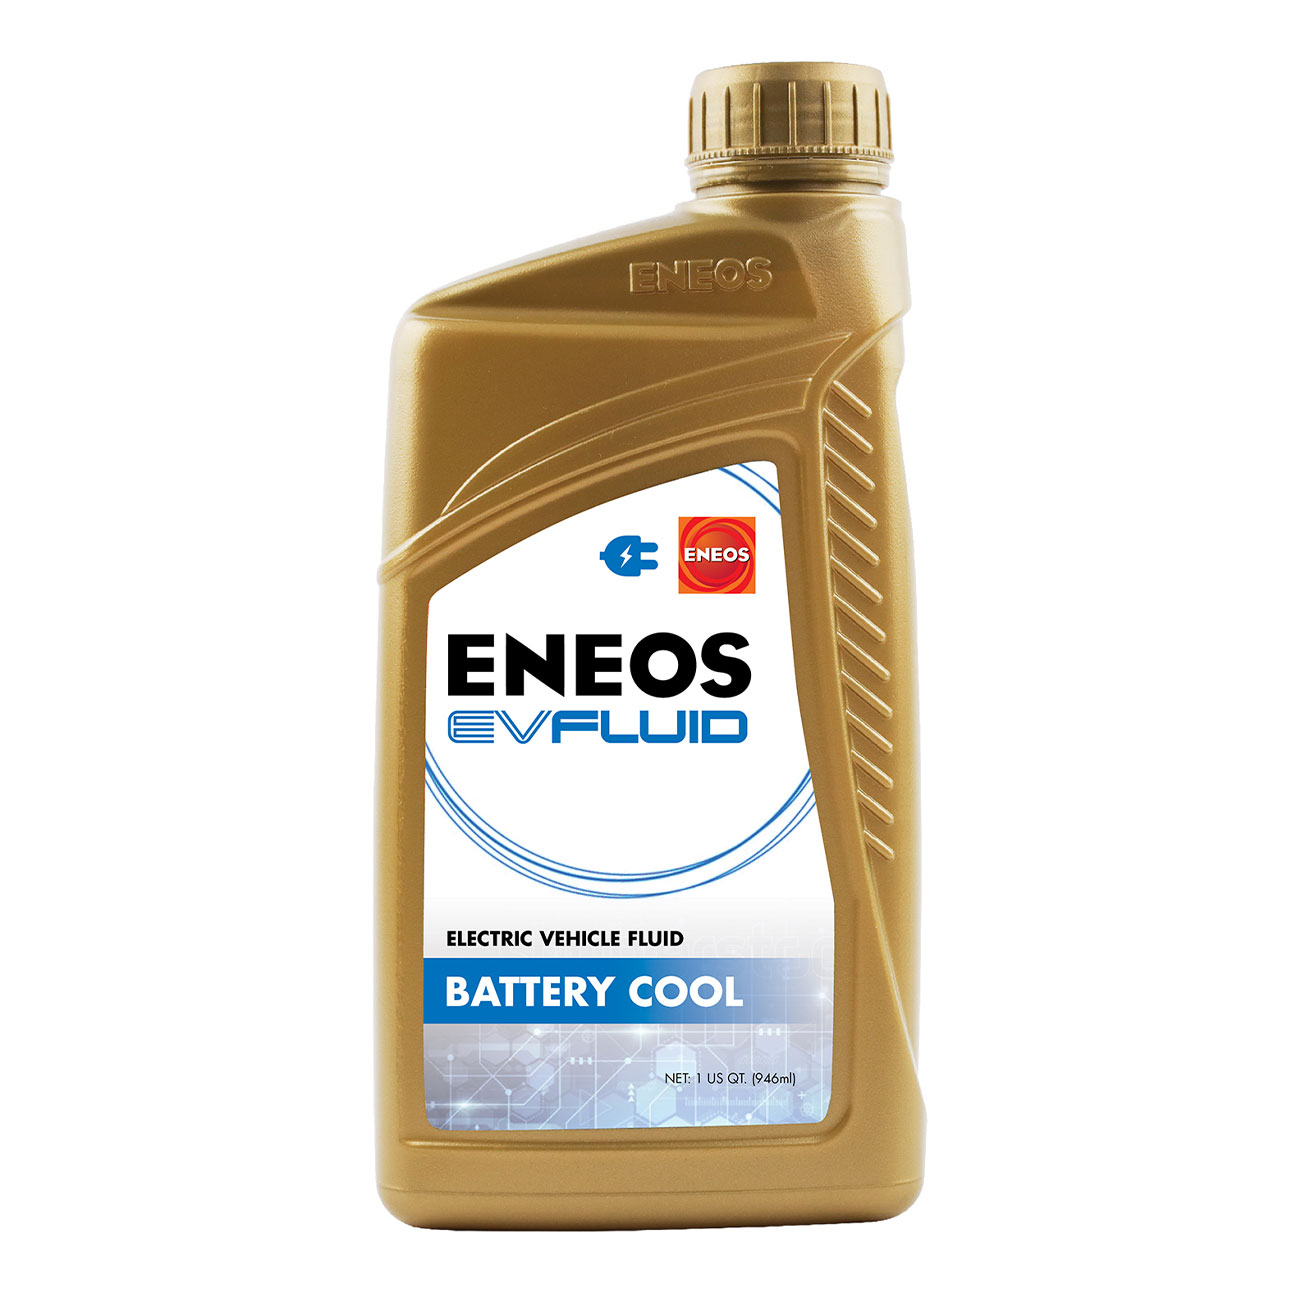 ENEOS EV Fluid Battery Cool